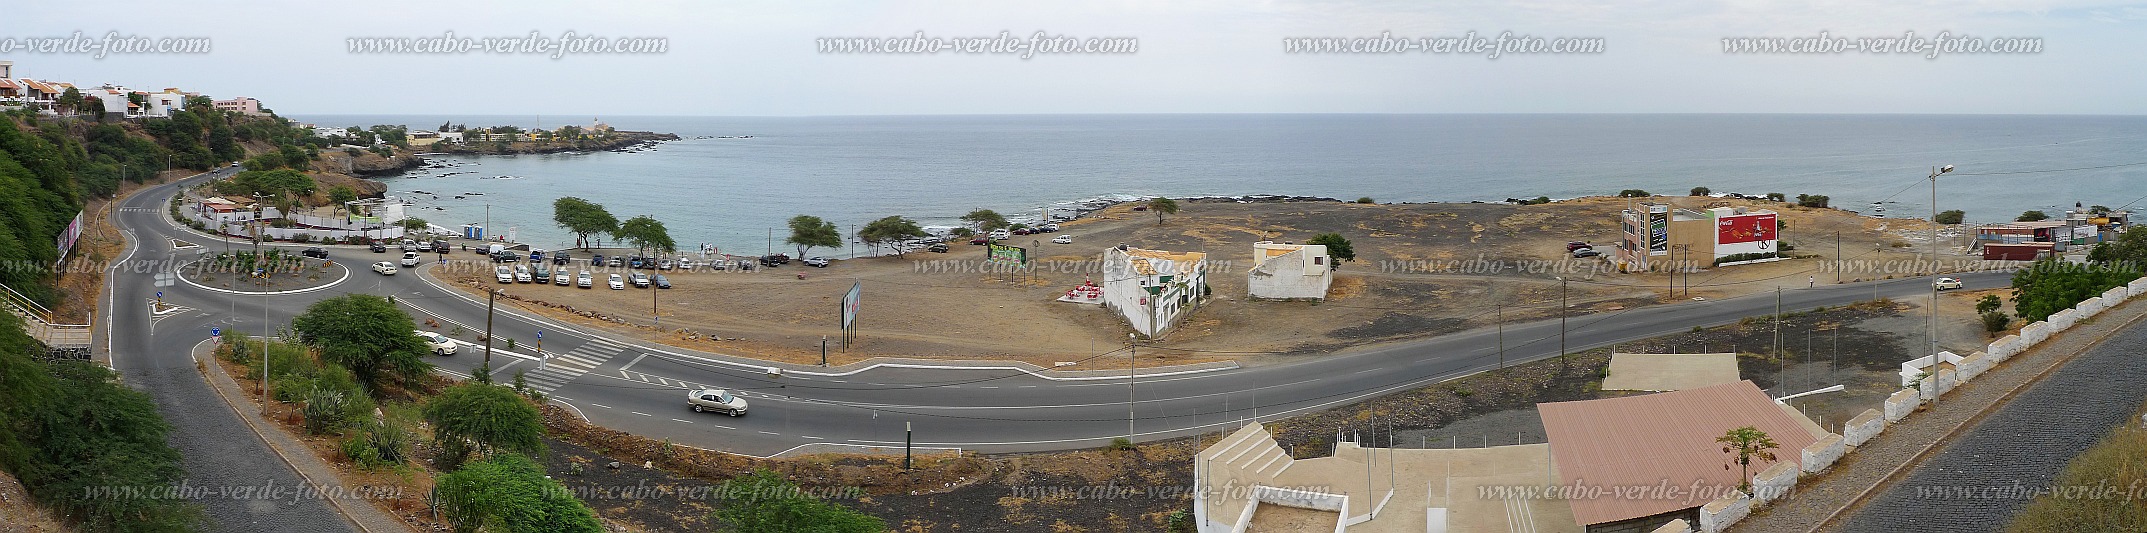 Santiago : Praia Quebra Canela : roads and roundabout : Landscape TownCabo Verde Foto Gallery